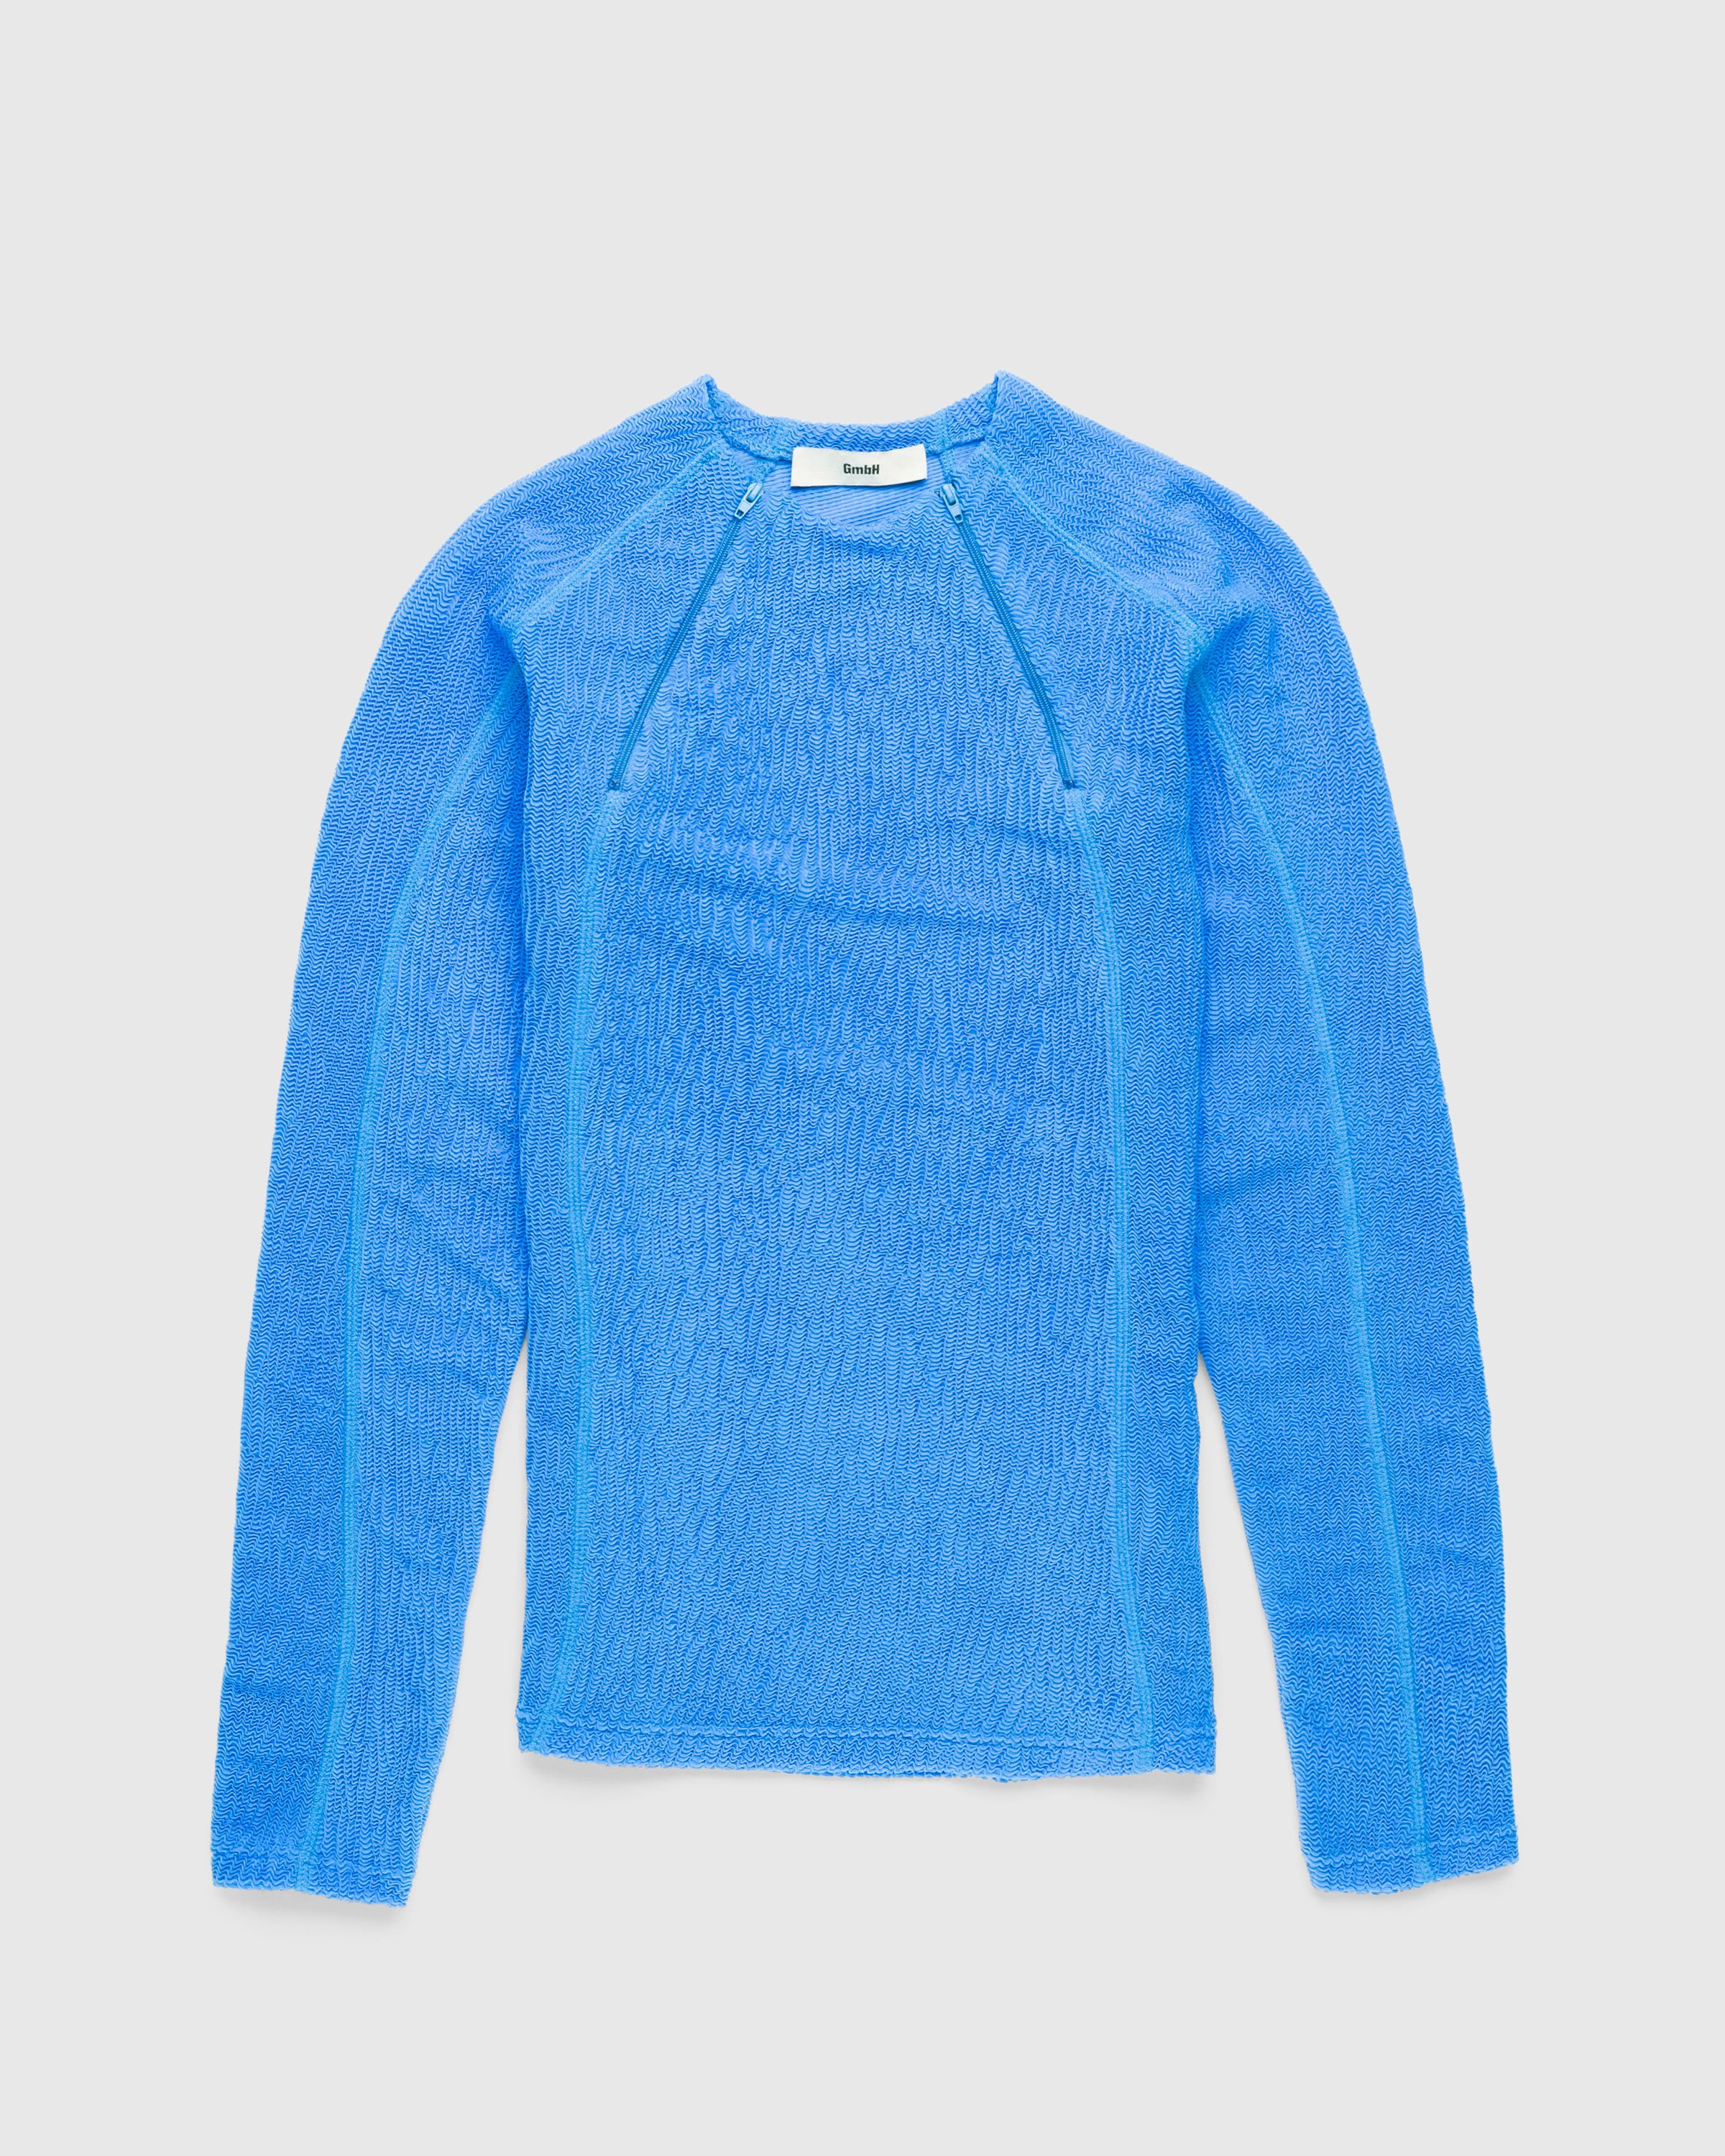 GmbH - Deema Rashguard Blue - Clothing - Blue - Image 1